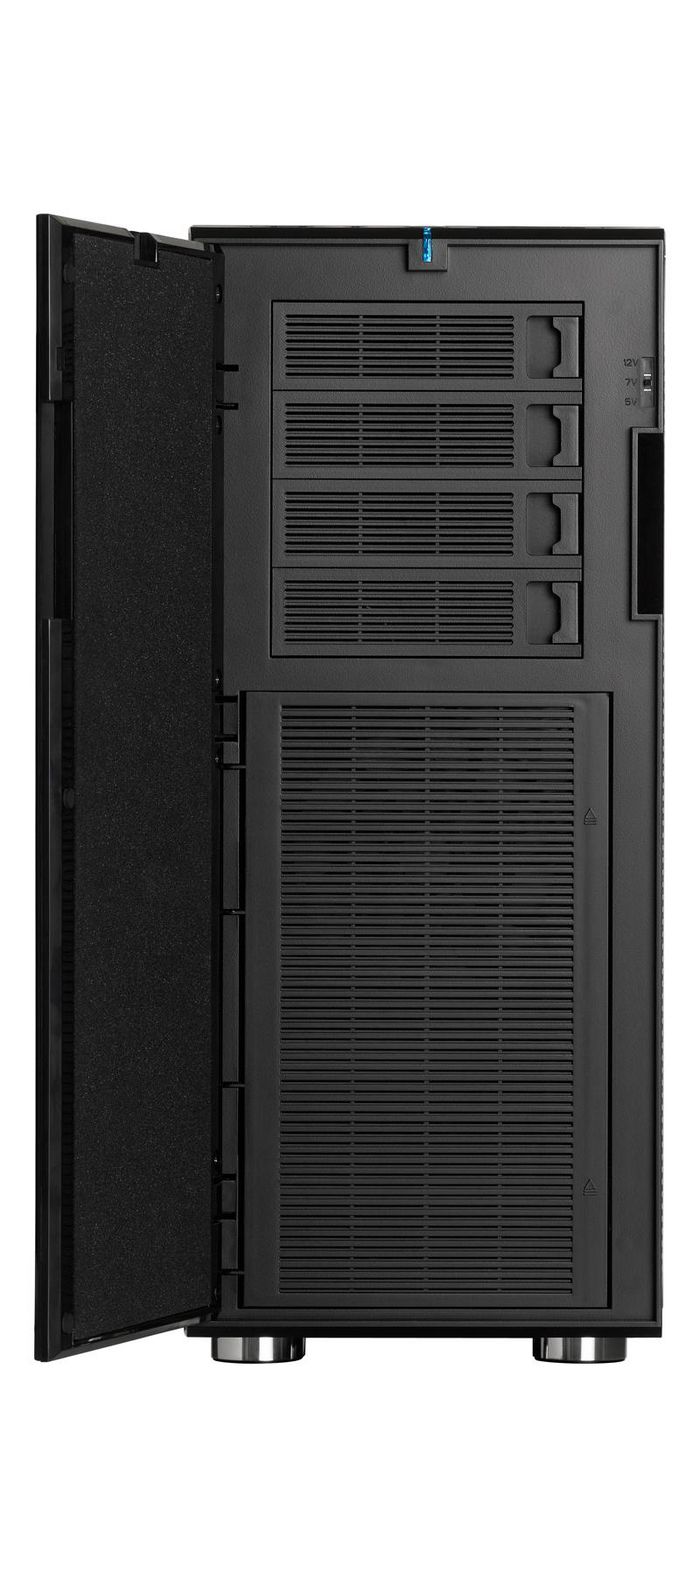 Fractal Design Full Tower, ATX / Micro ATX / Mini ATX / E-ATX / XL-ATX, 4x 5.25" bays, 8x 3.5" HDD trays, 9x expansion slots, 7x Fan positions (3 fans included), 2x USB2.0, 2x USB3.0, Audio in/out, Black Pear - W125149964